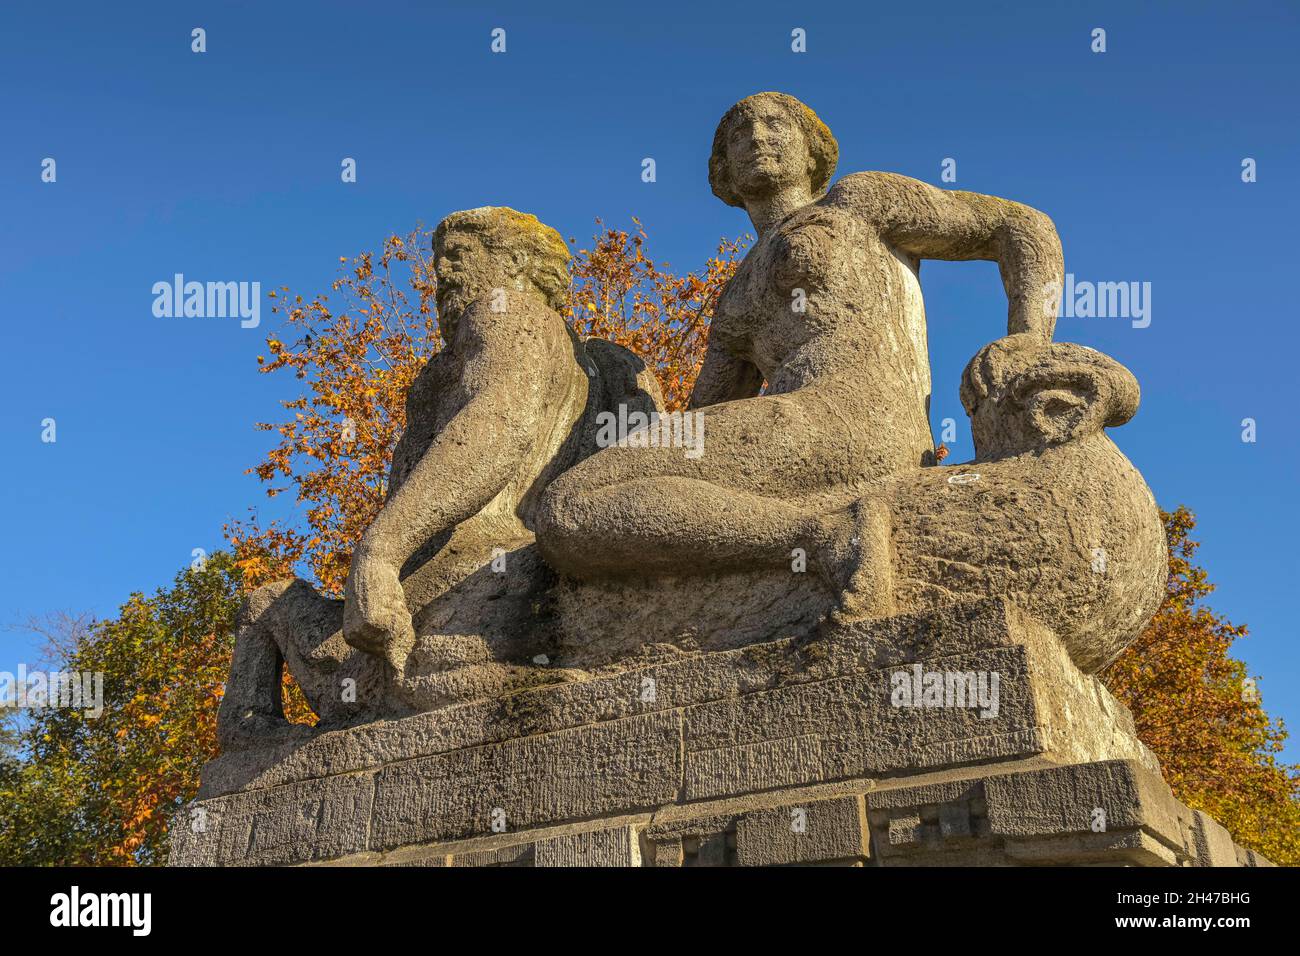 Herbst, Steinfiguren, Carl-Zuckmayer-Brücke, Rudolph-Wilde-Park, Schöneberg, Tempelhof-Schöneberg, Berlino, Germania Foto Stock